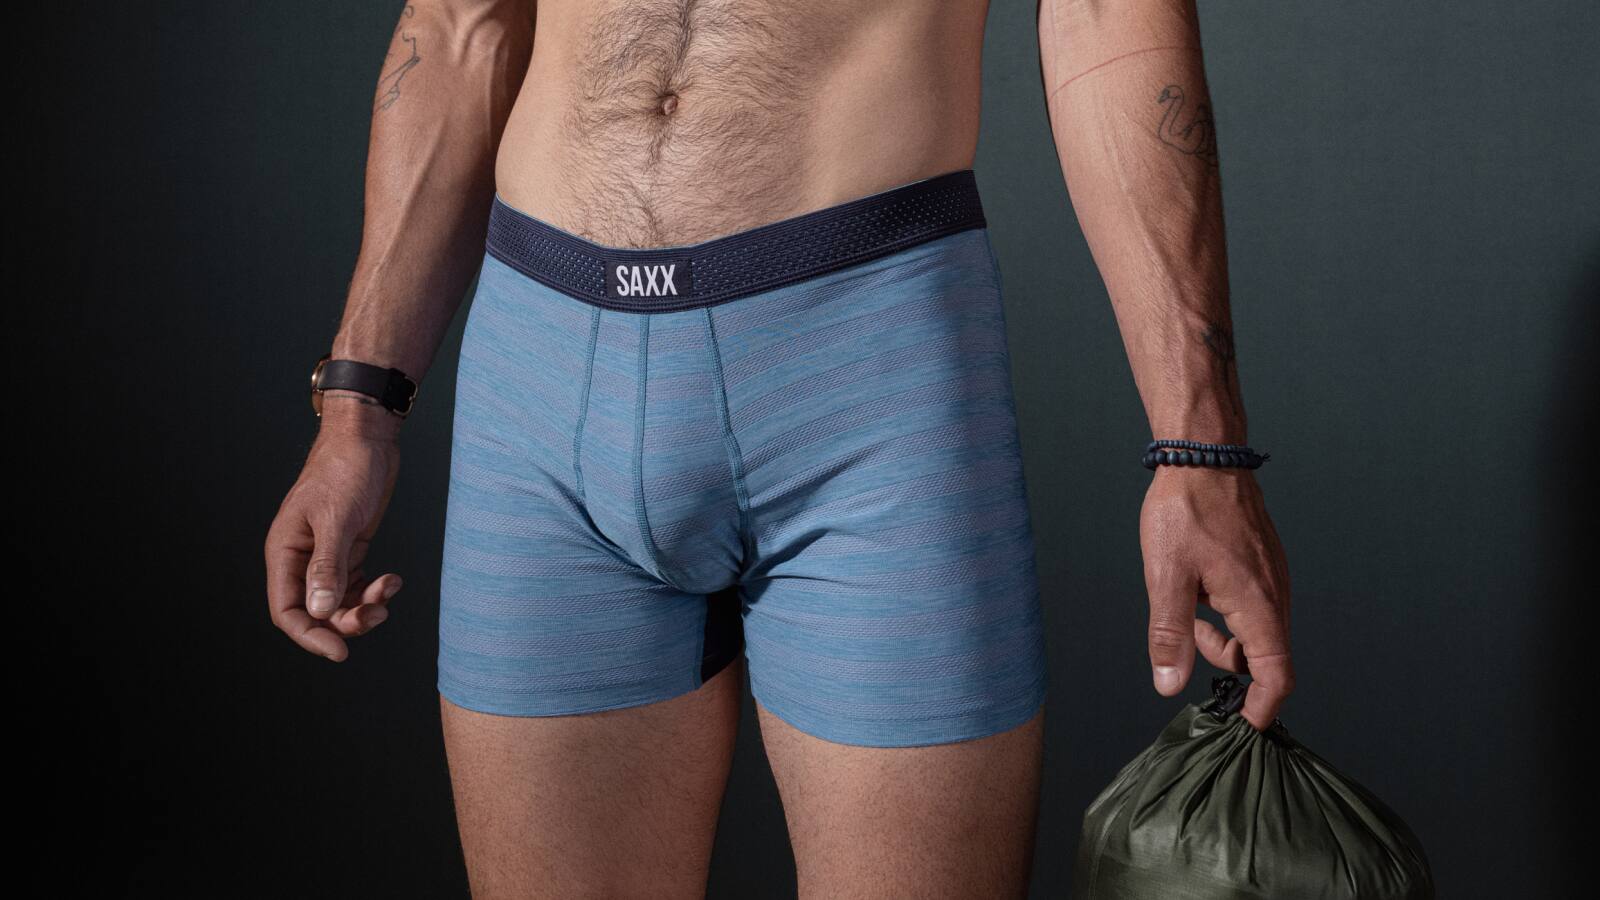 SAXX Underwear - Rakuten coupons and Cash Back